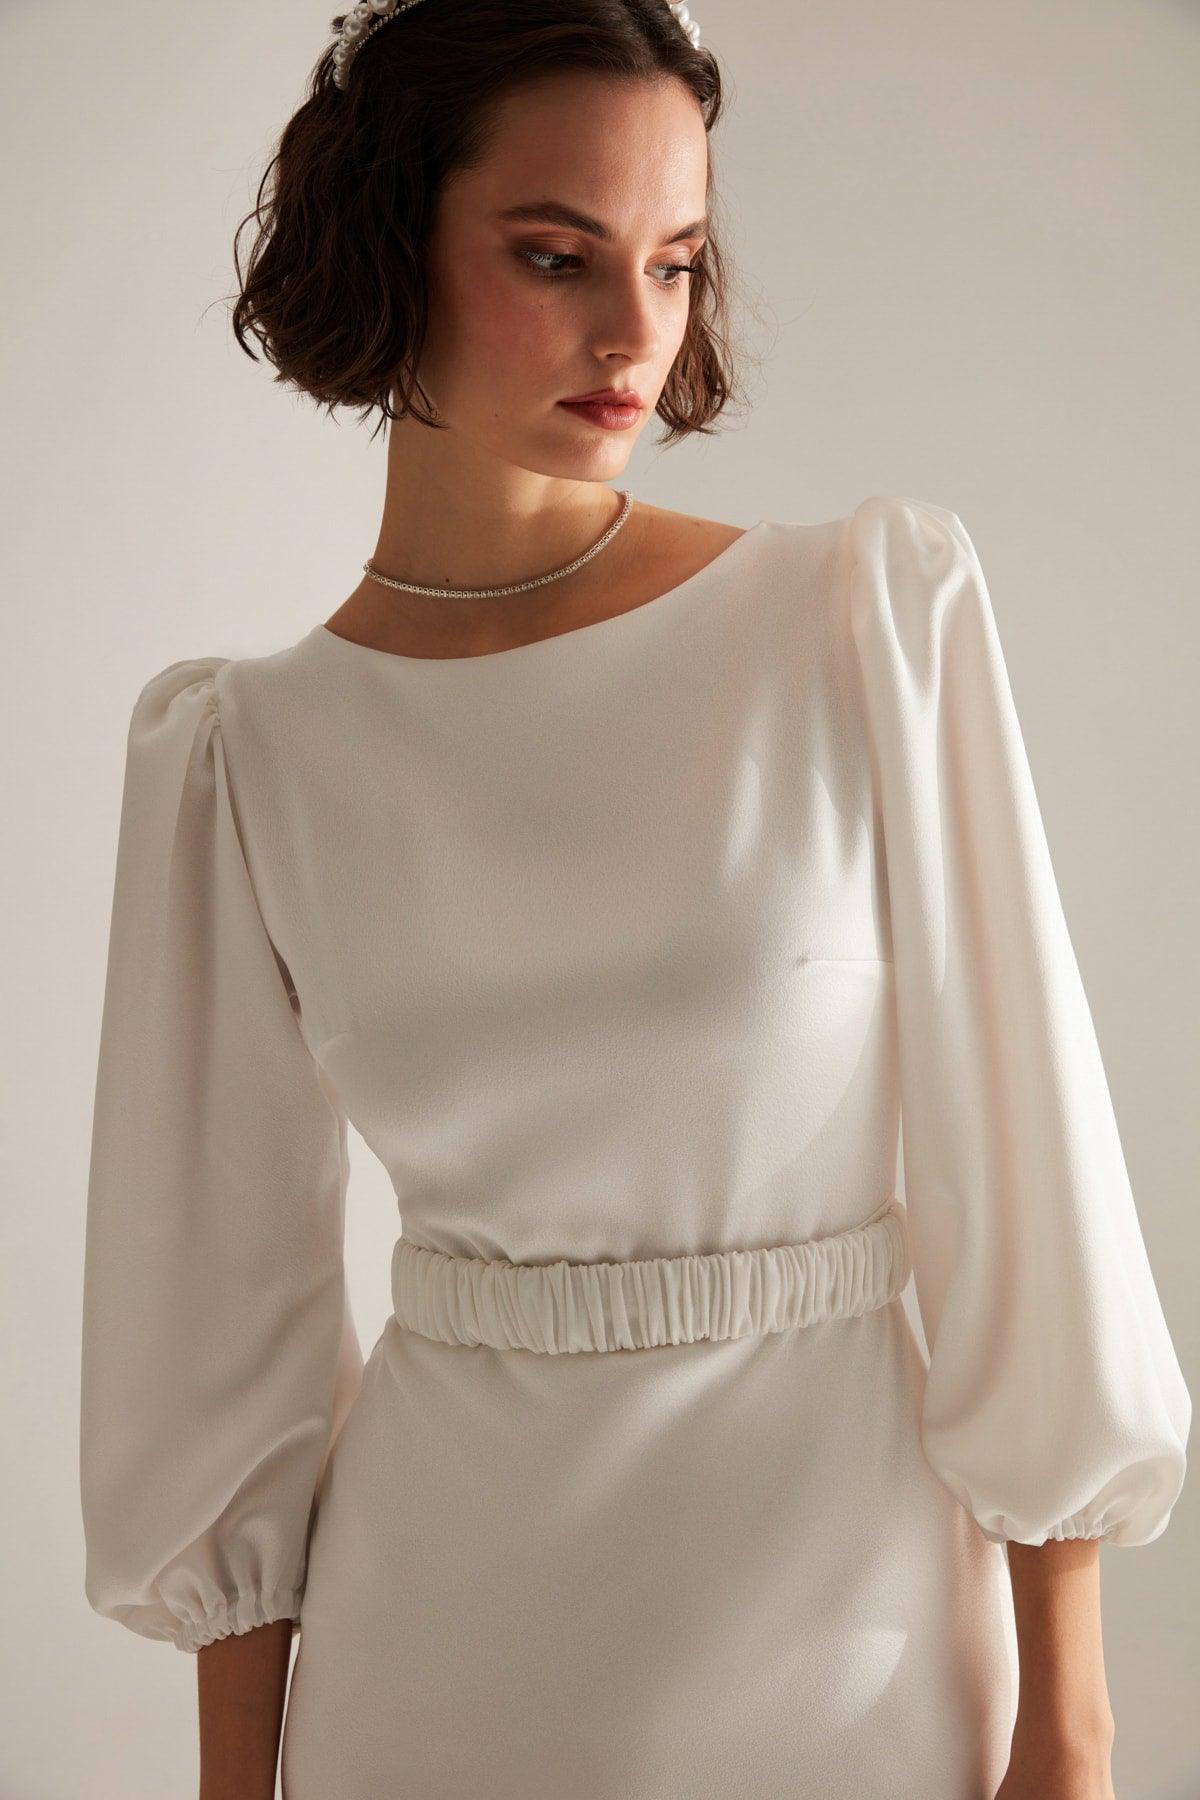 Heleny Special Design White Engagement Dress - Swordslife